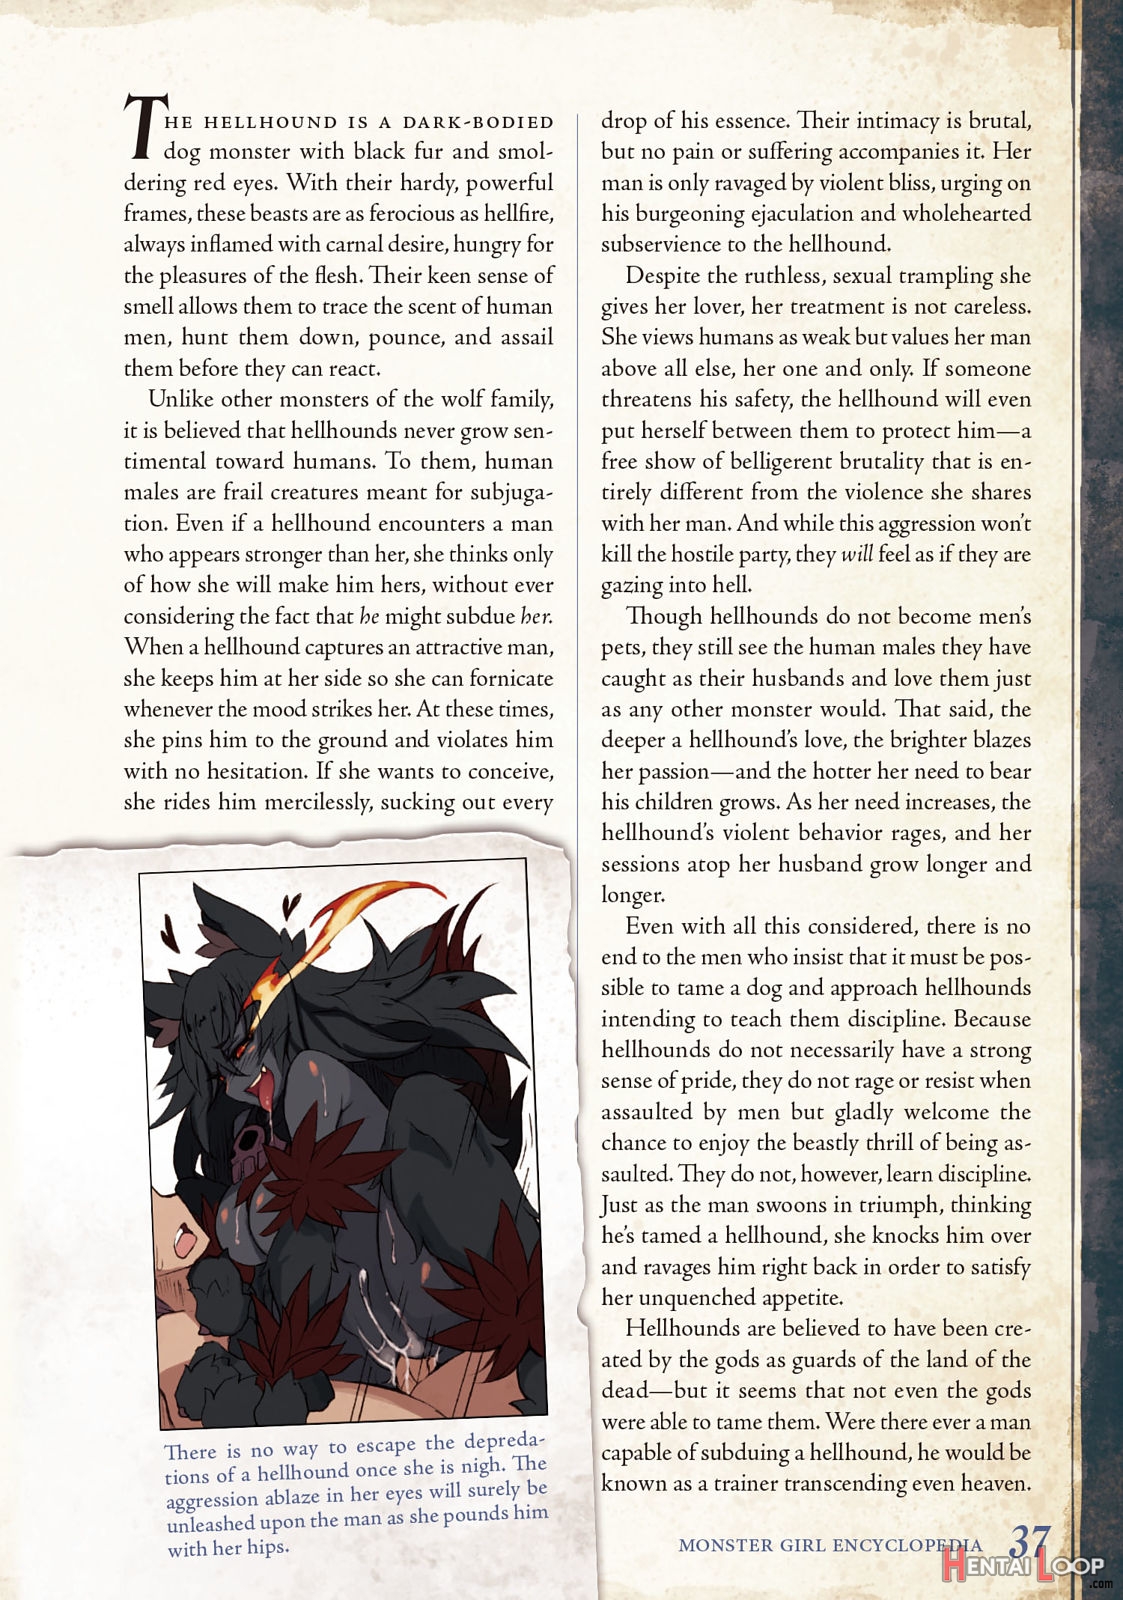 Monster Girl Encyclopedia Vol. 2 page 38